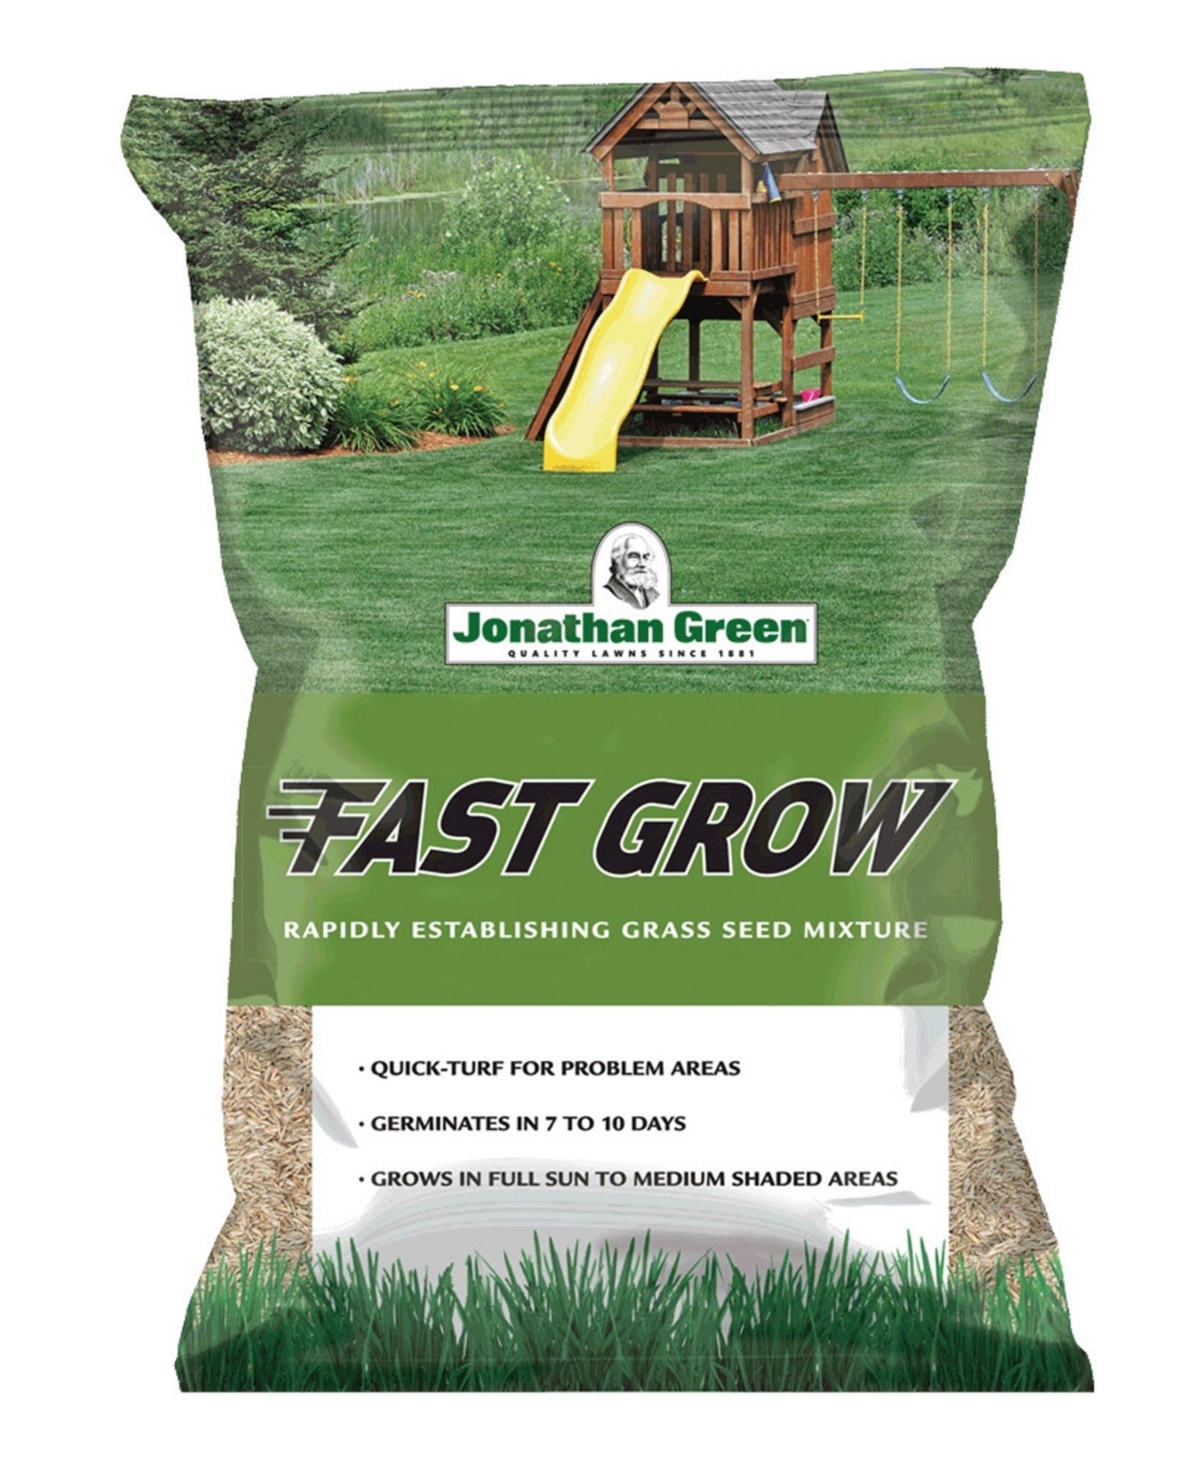 (#10830) Fast Grow Grass Seed Mixture, 15lb bag - Brown